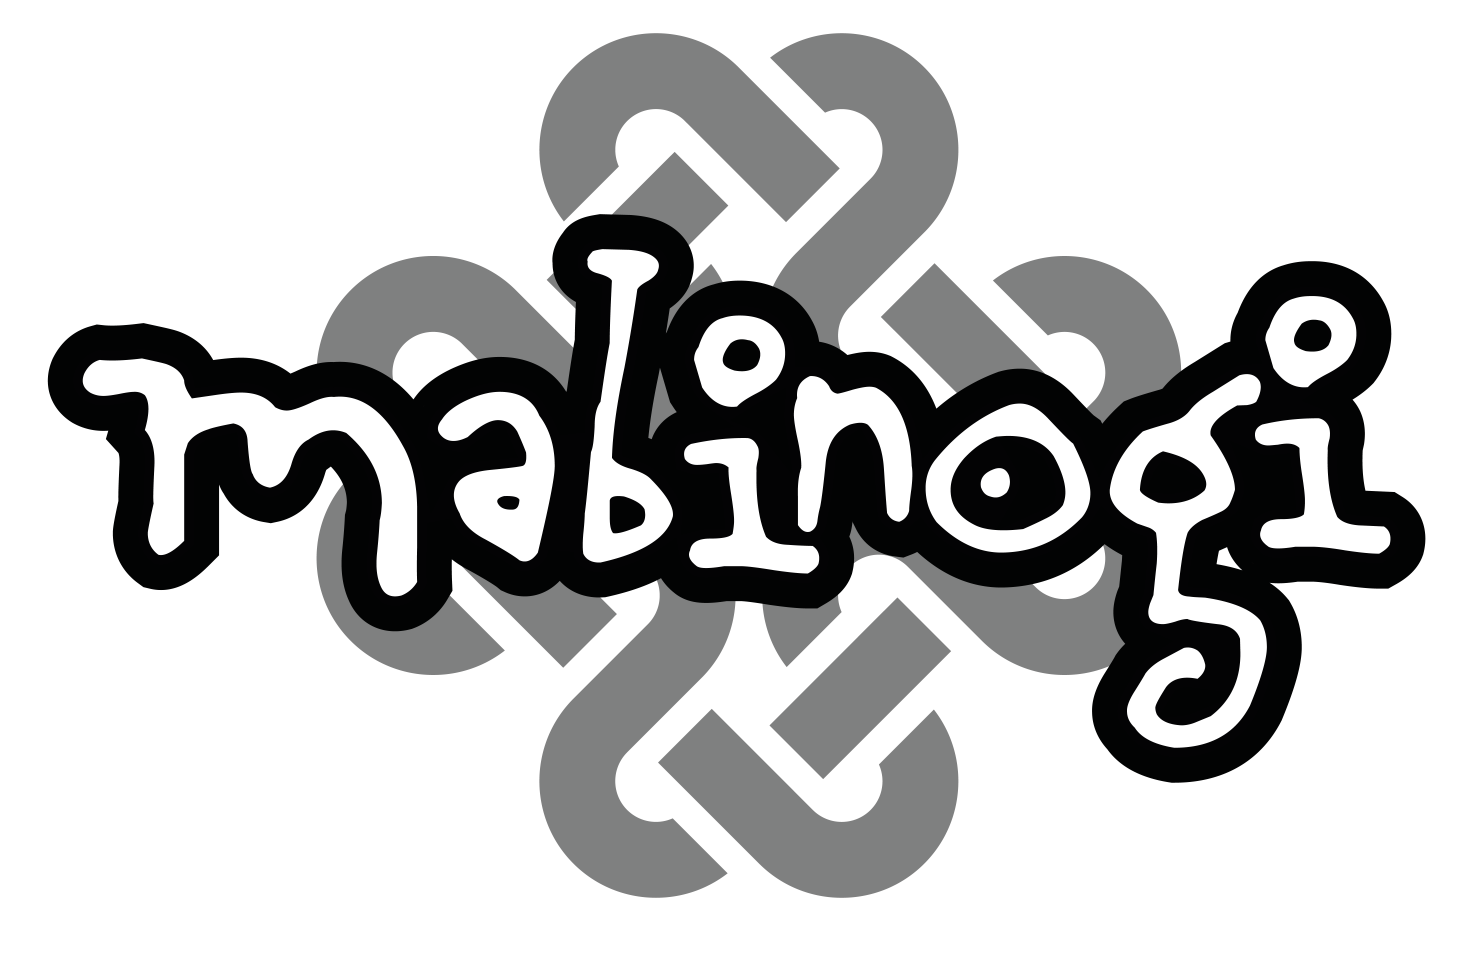 Mabinogi Logo